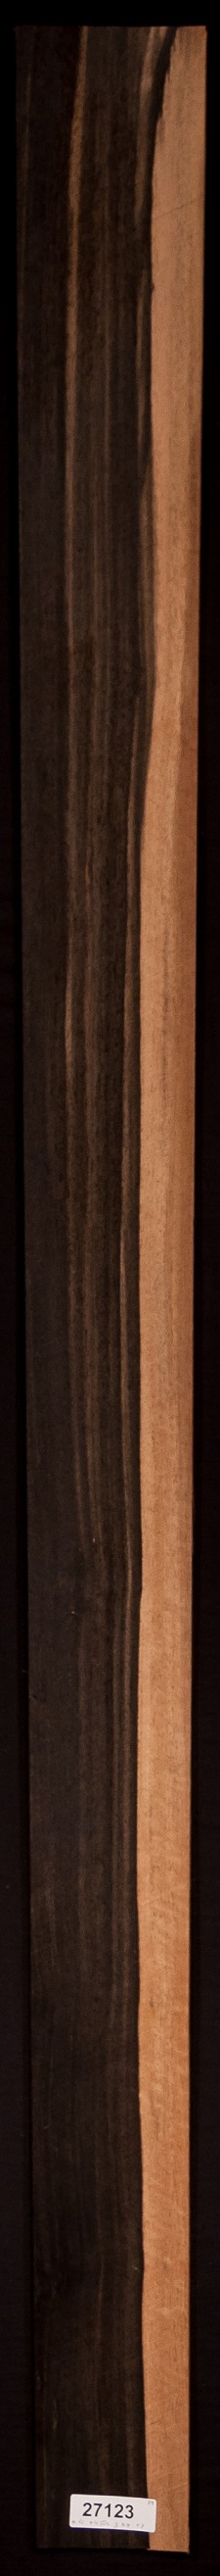 Ebony Veneer : Brown Quartered Ebony V-Tec Wood Veneer Sheets